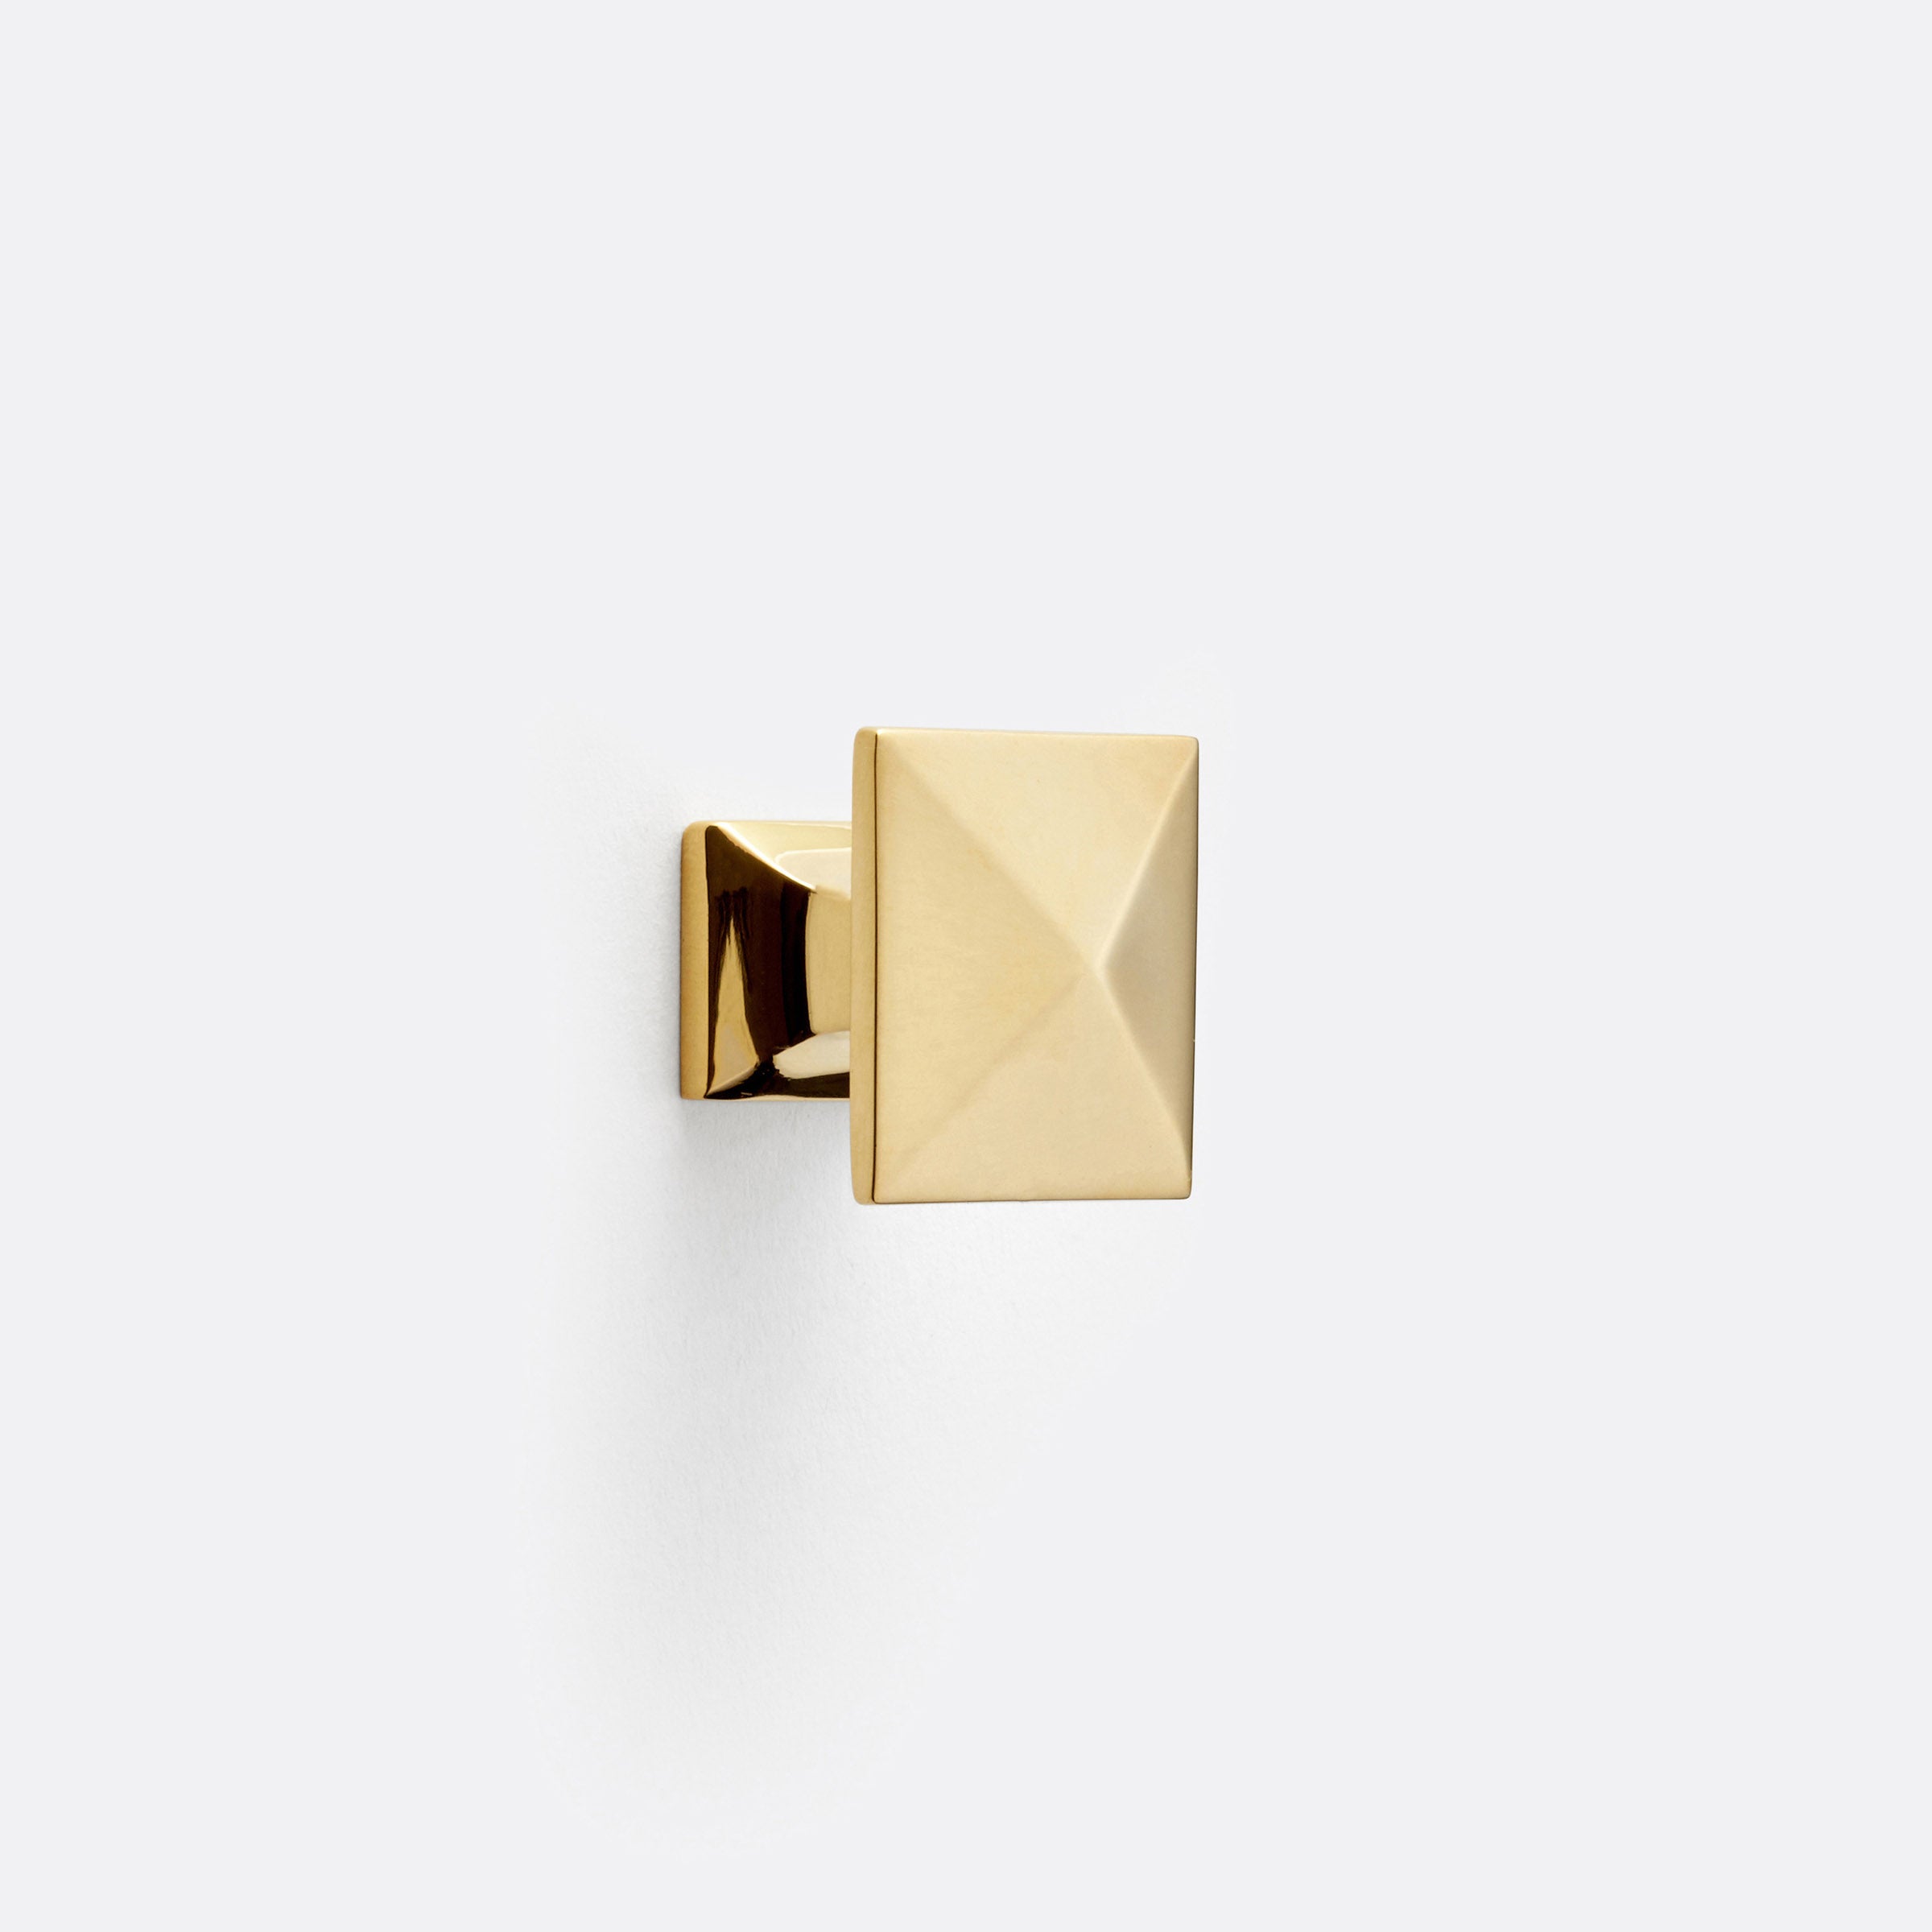 Mission Pyramid Cabinet Knob by Rejuvenation Unlacquered Brass